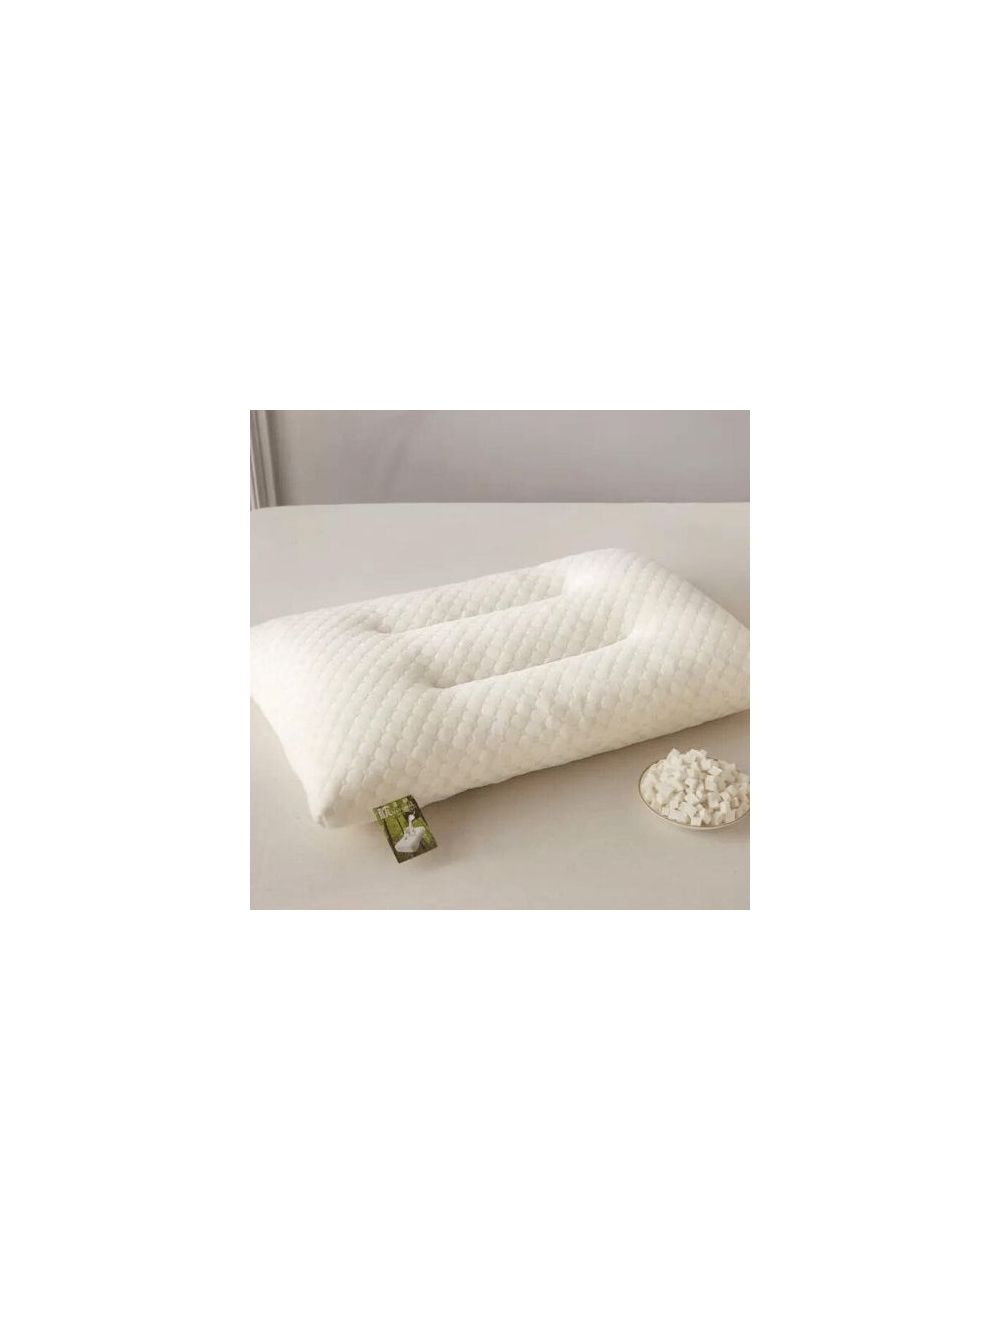 DEALS FOR LESS - 1 Piece Natural Latex Soft Pillow.-P02